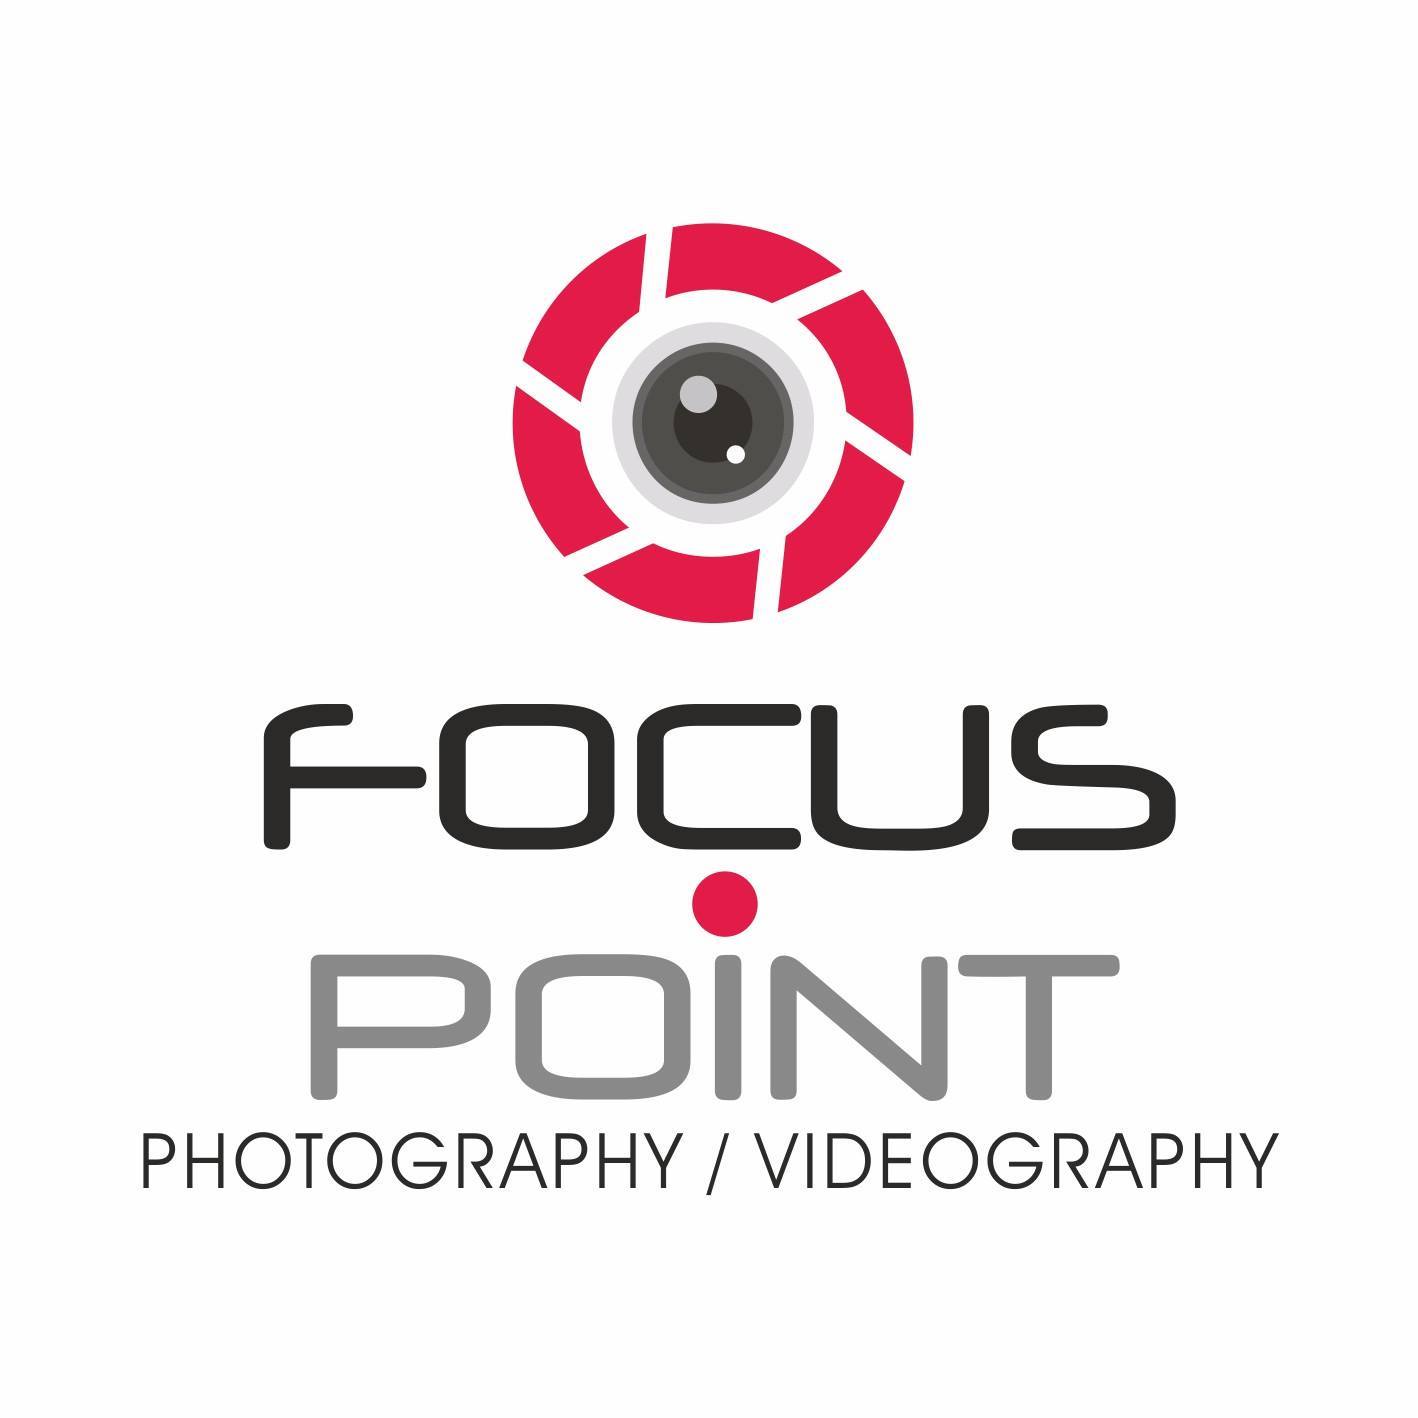 FocusPoint - Σπύρος Κυρίτσης, Φωτογράφοι, Βίντεο, Βιντεοσκόπηση 4K, Ci